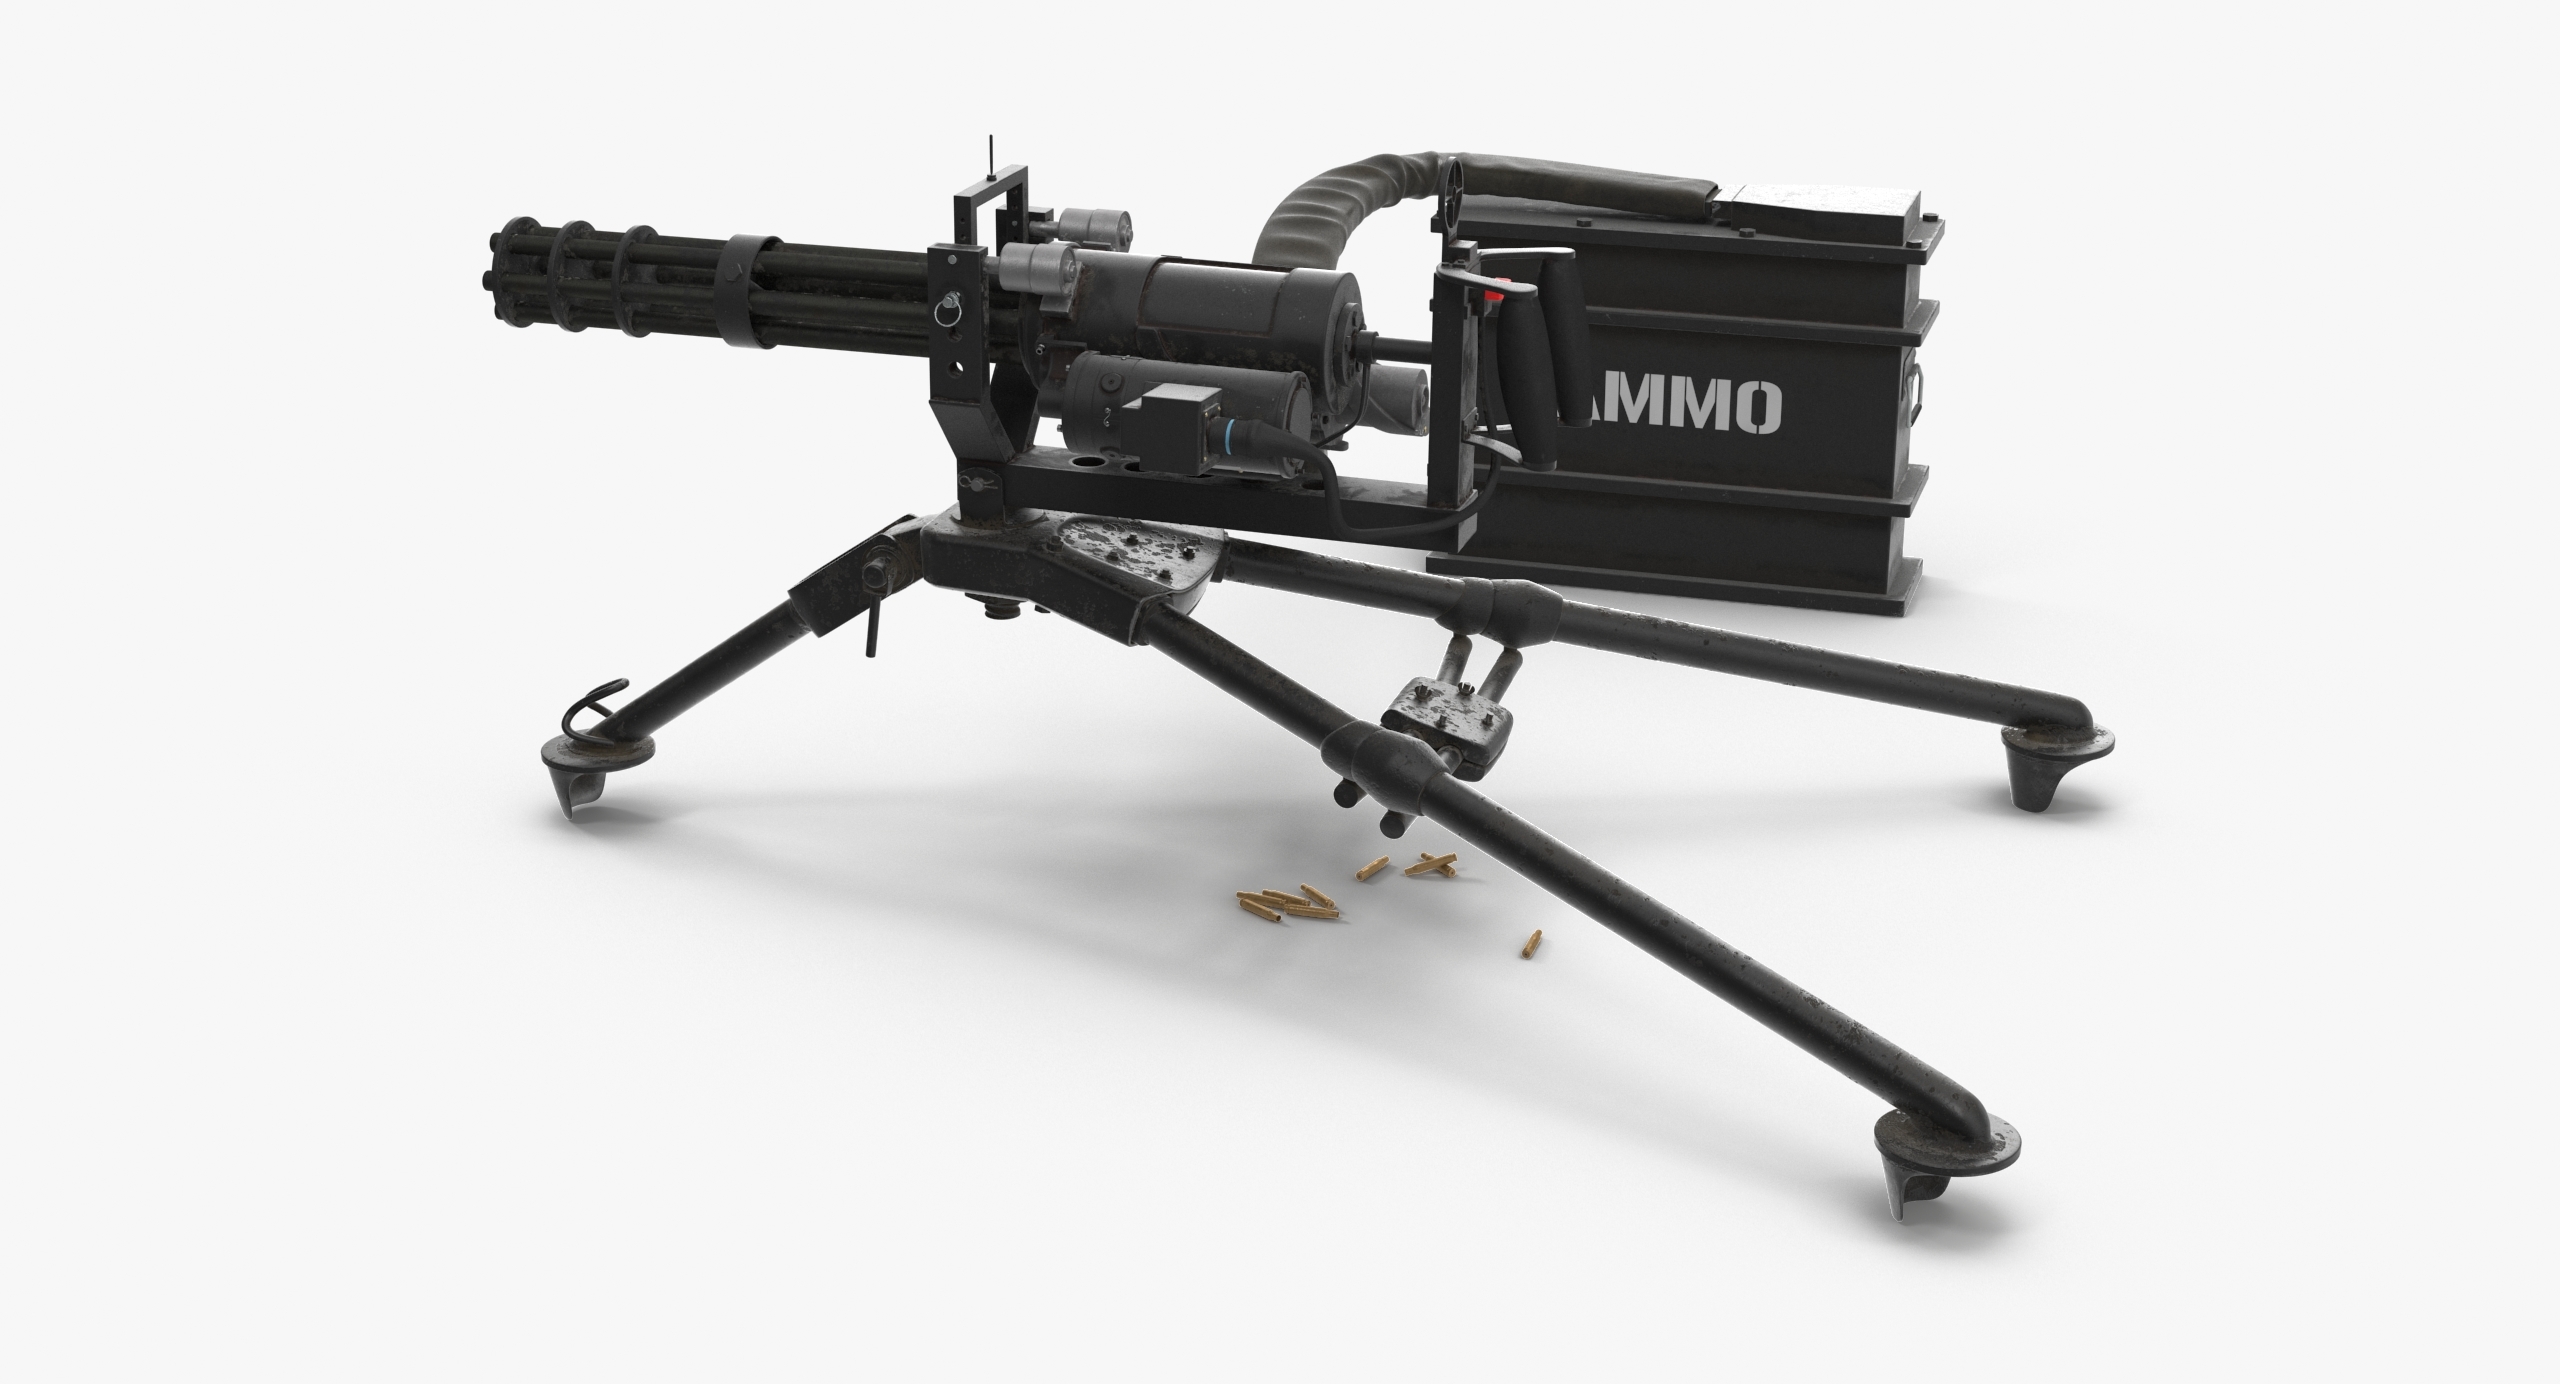 3d m134 minigun tripod mounted and ammo crate dirt